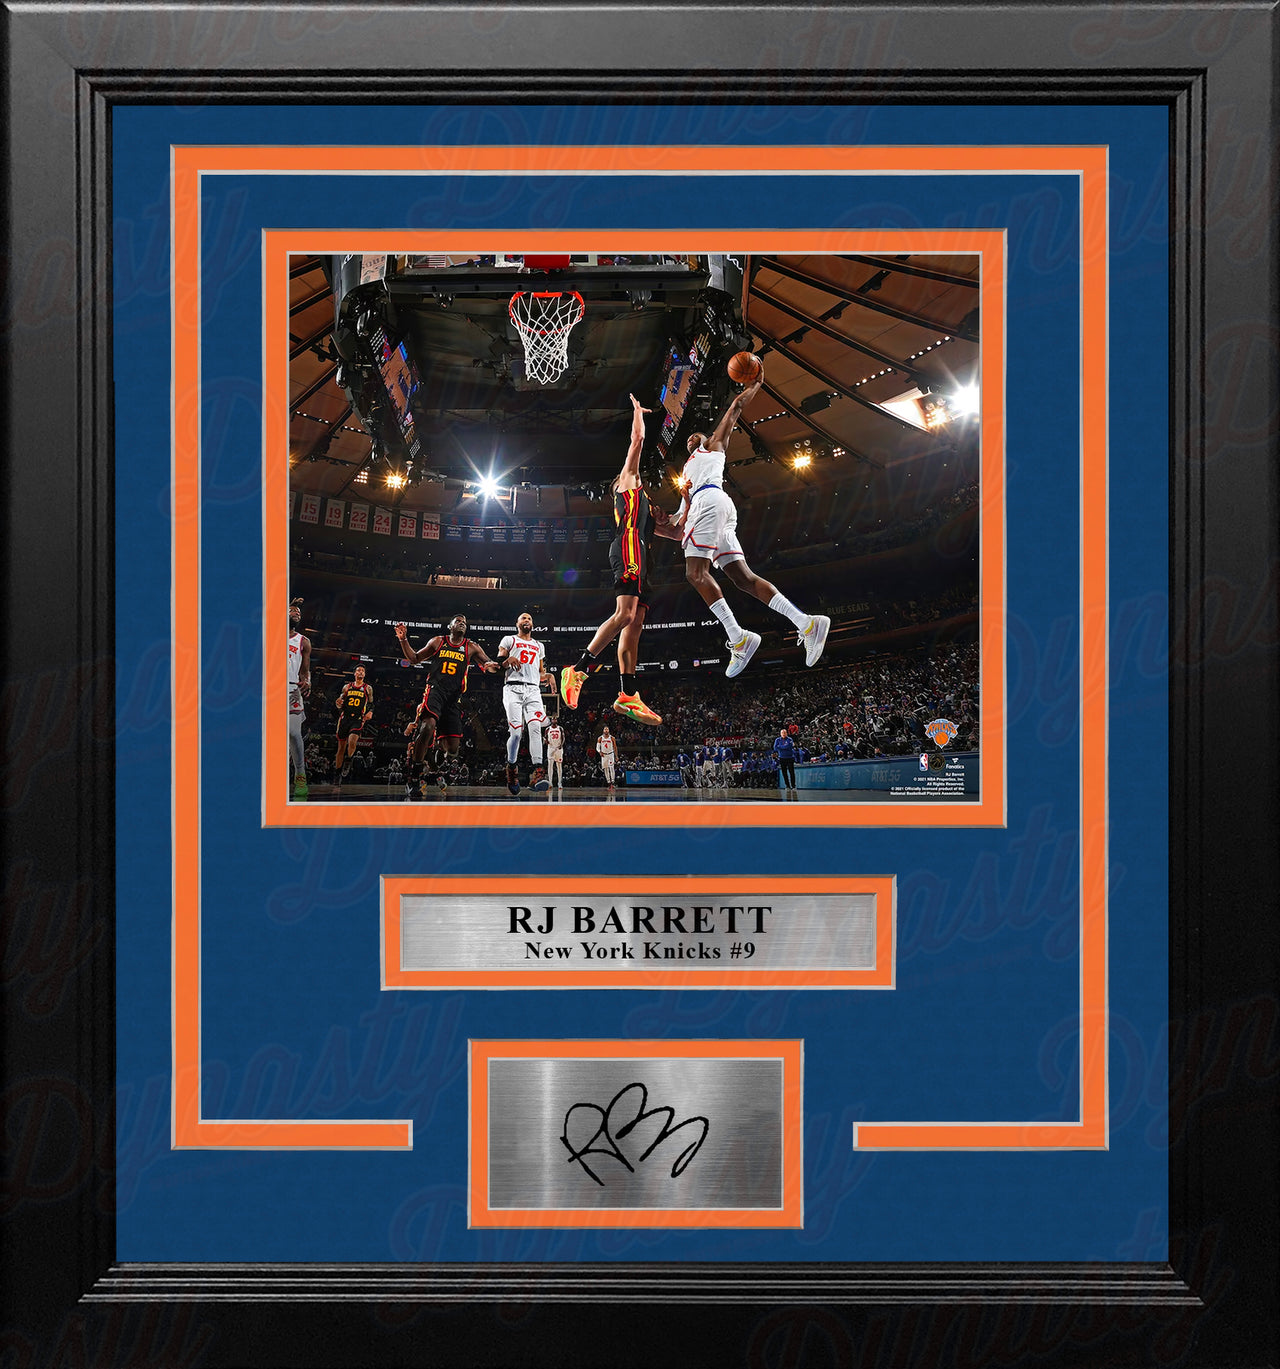 RJ Barrett Slam Dunk New York Knicks 8" x 10" Framed Basketball Photo with Engraved Autograph - Dynasty Sports & Framing 